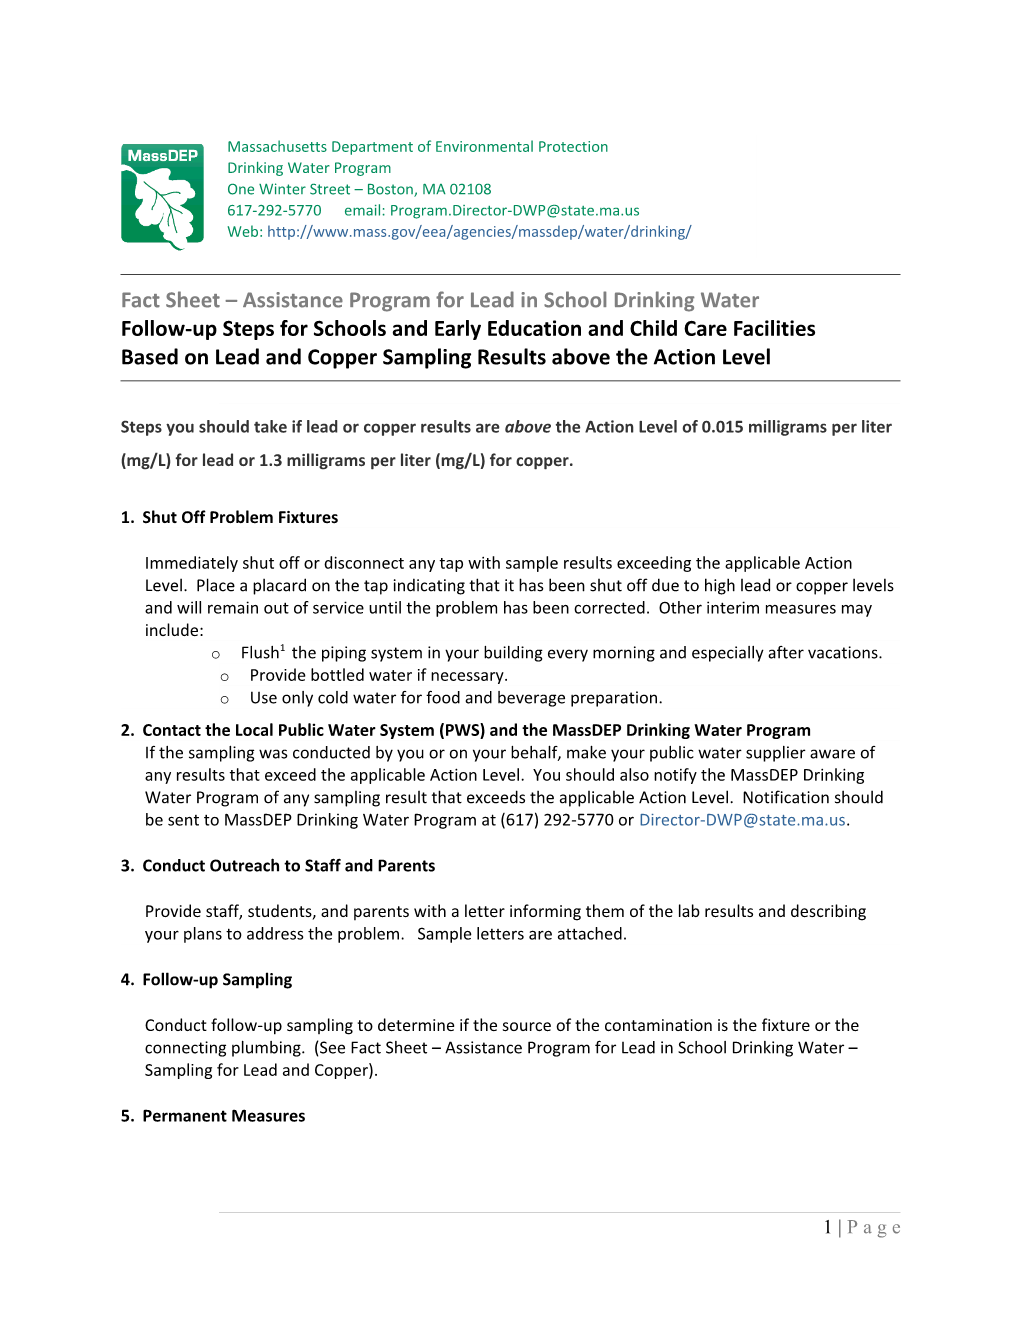 Fact Sheet Assistance Program for Lead in School Drinking Water